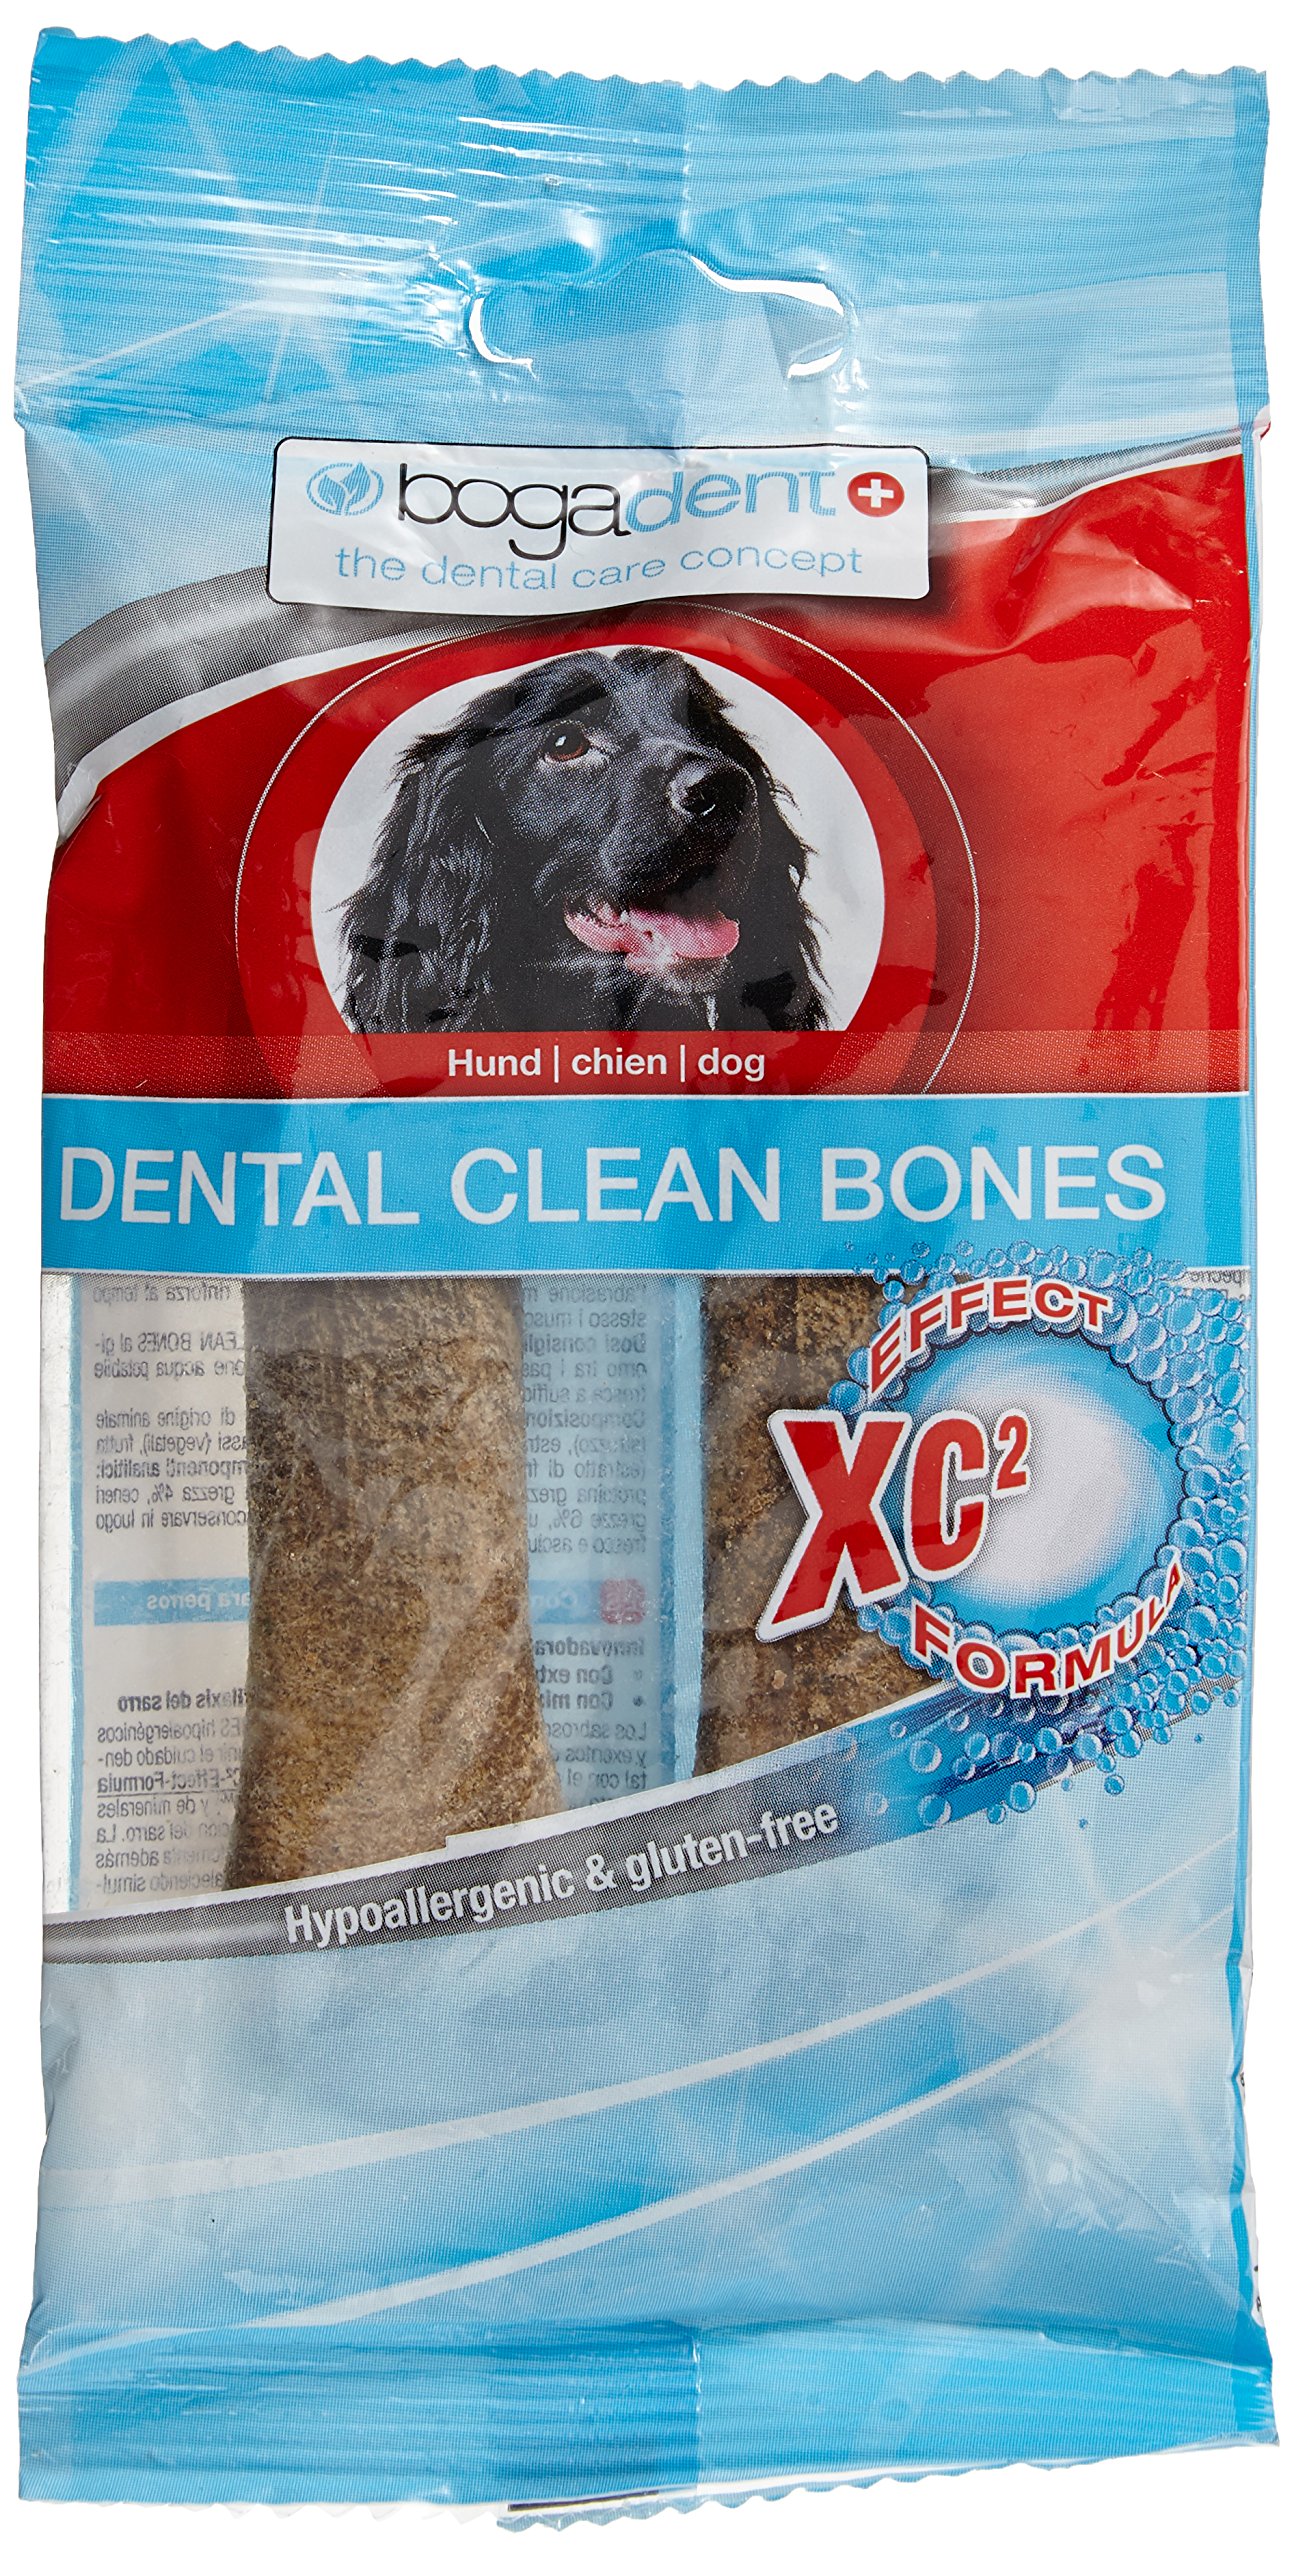 Bogadent-dental-clean-bones